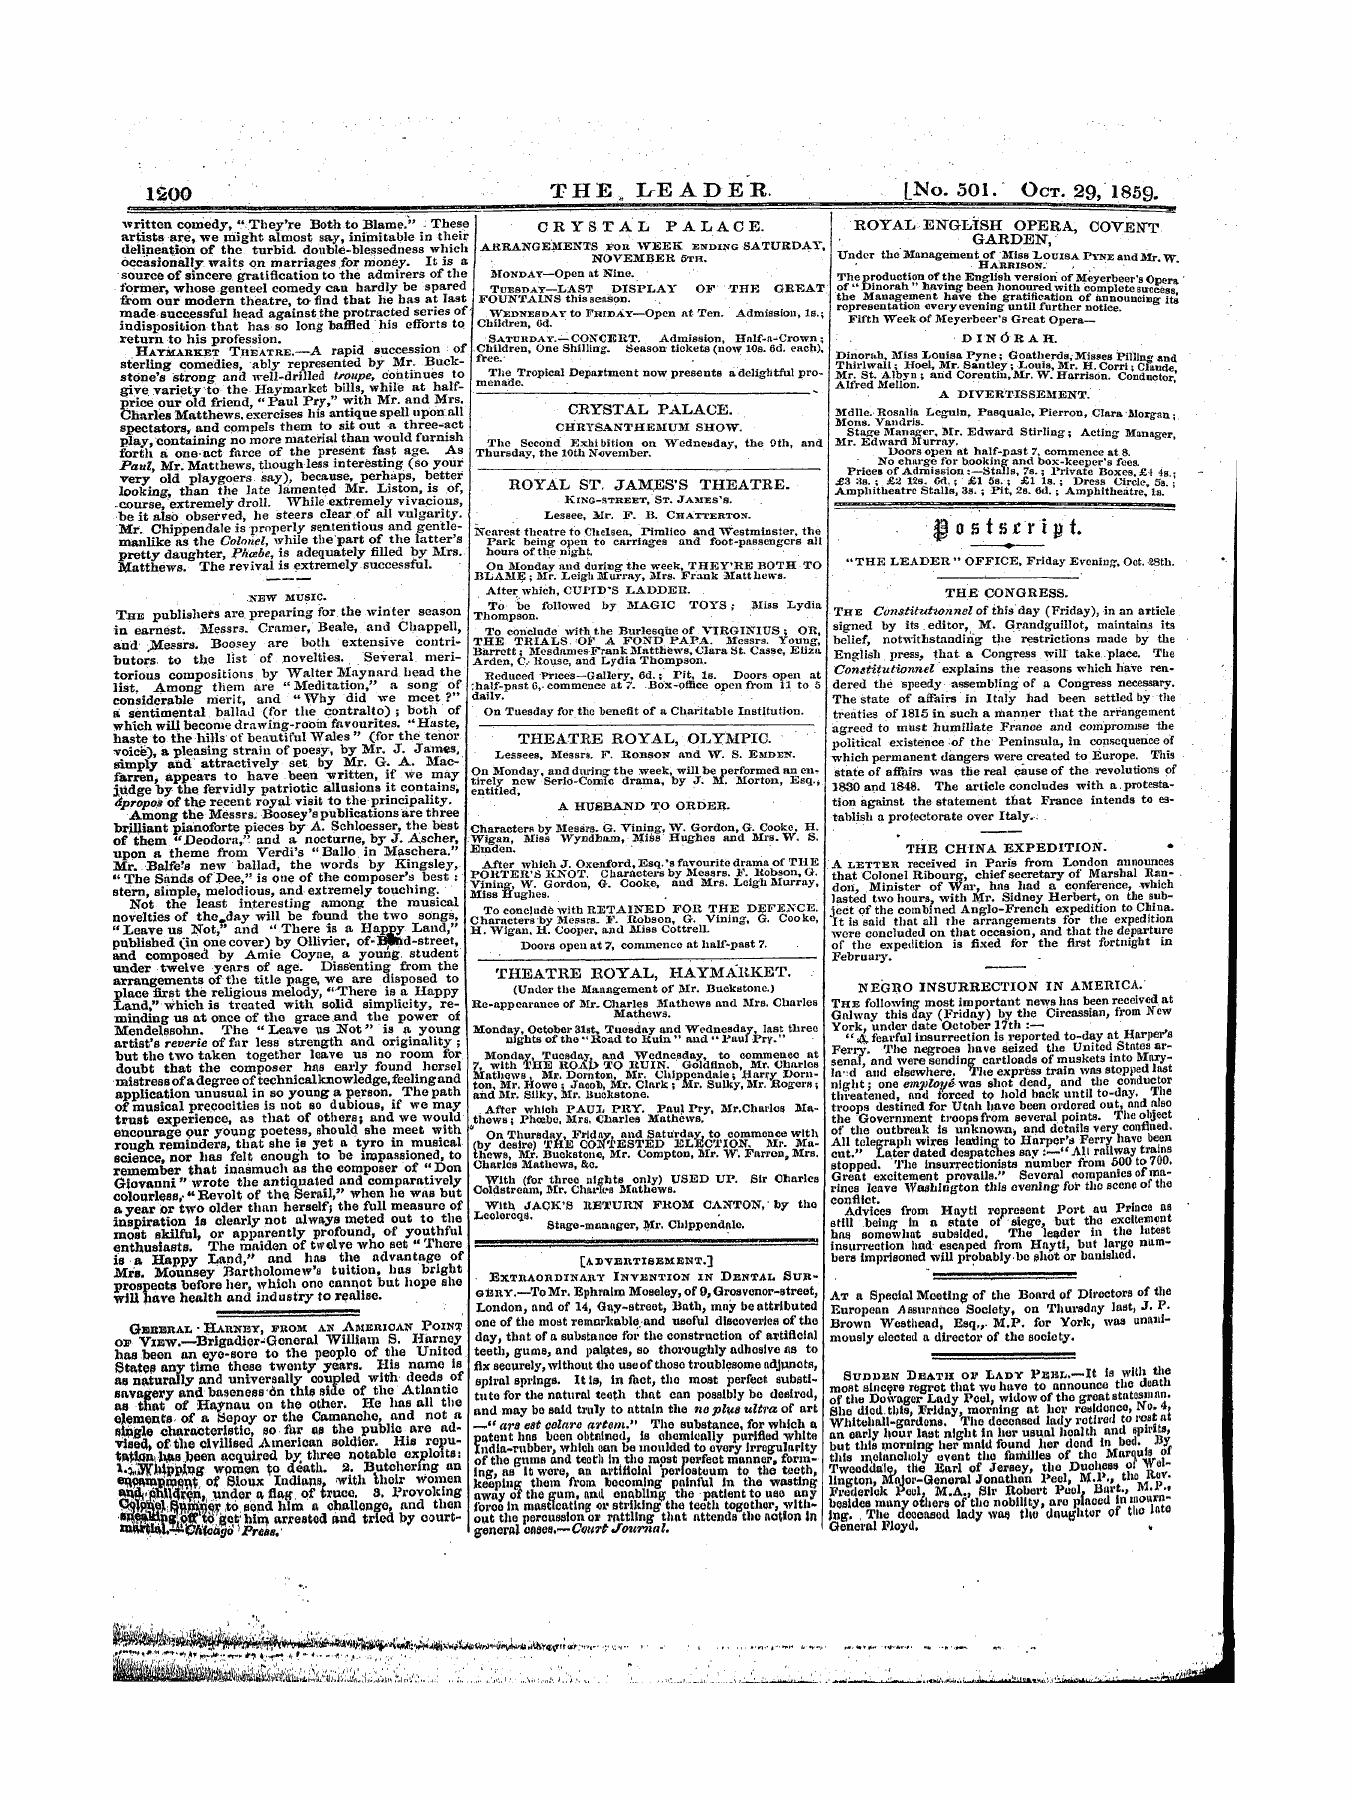 Leader (1850-1860): jS F Y, 1st edition - Crystal Palace. Akkangements Fob Week Endin G Saturday, November 5th.